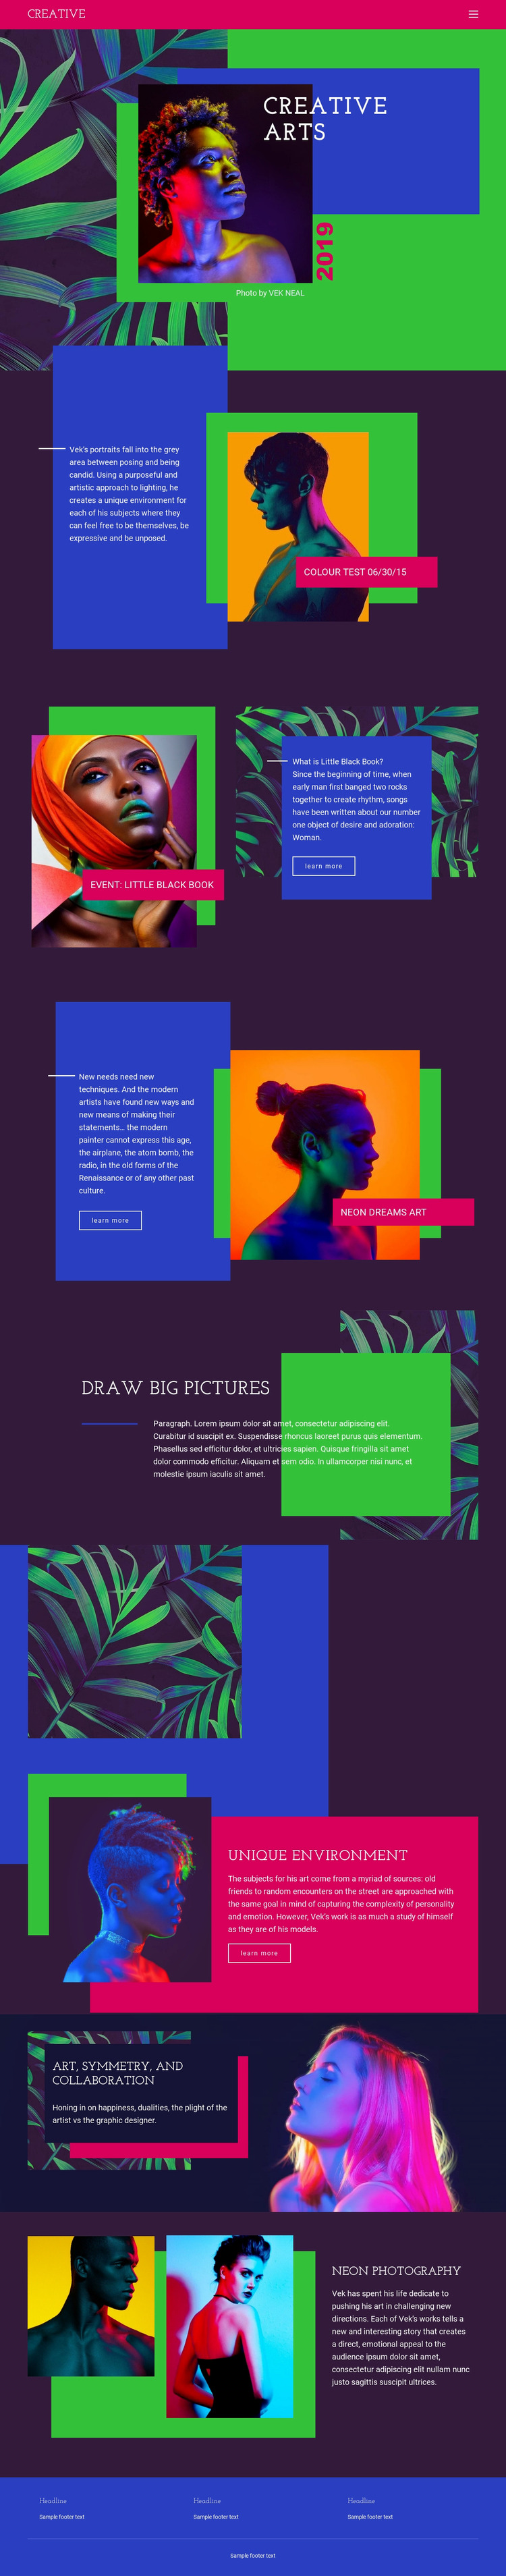 Creative Art Ideas Website Mockup